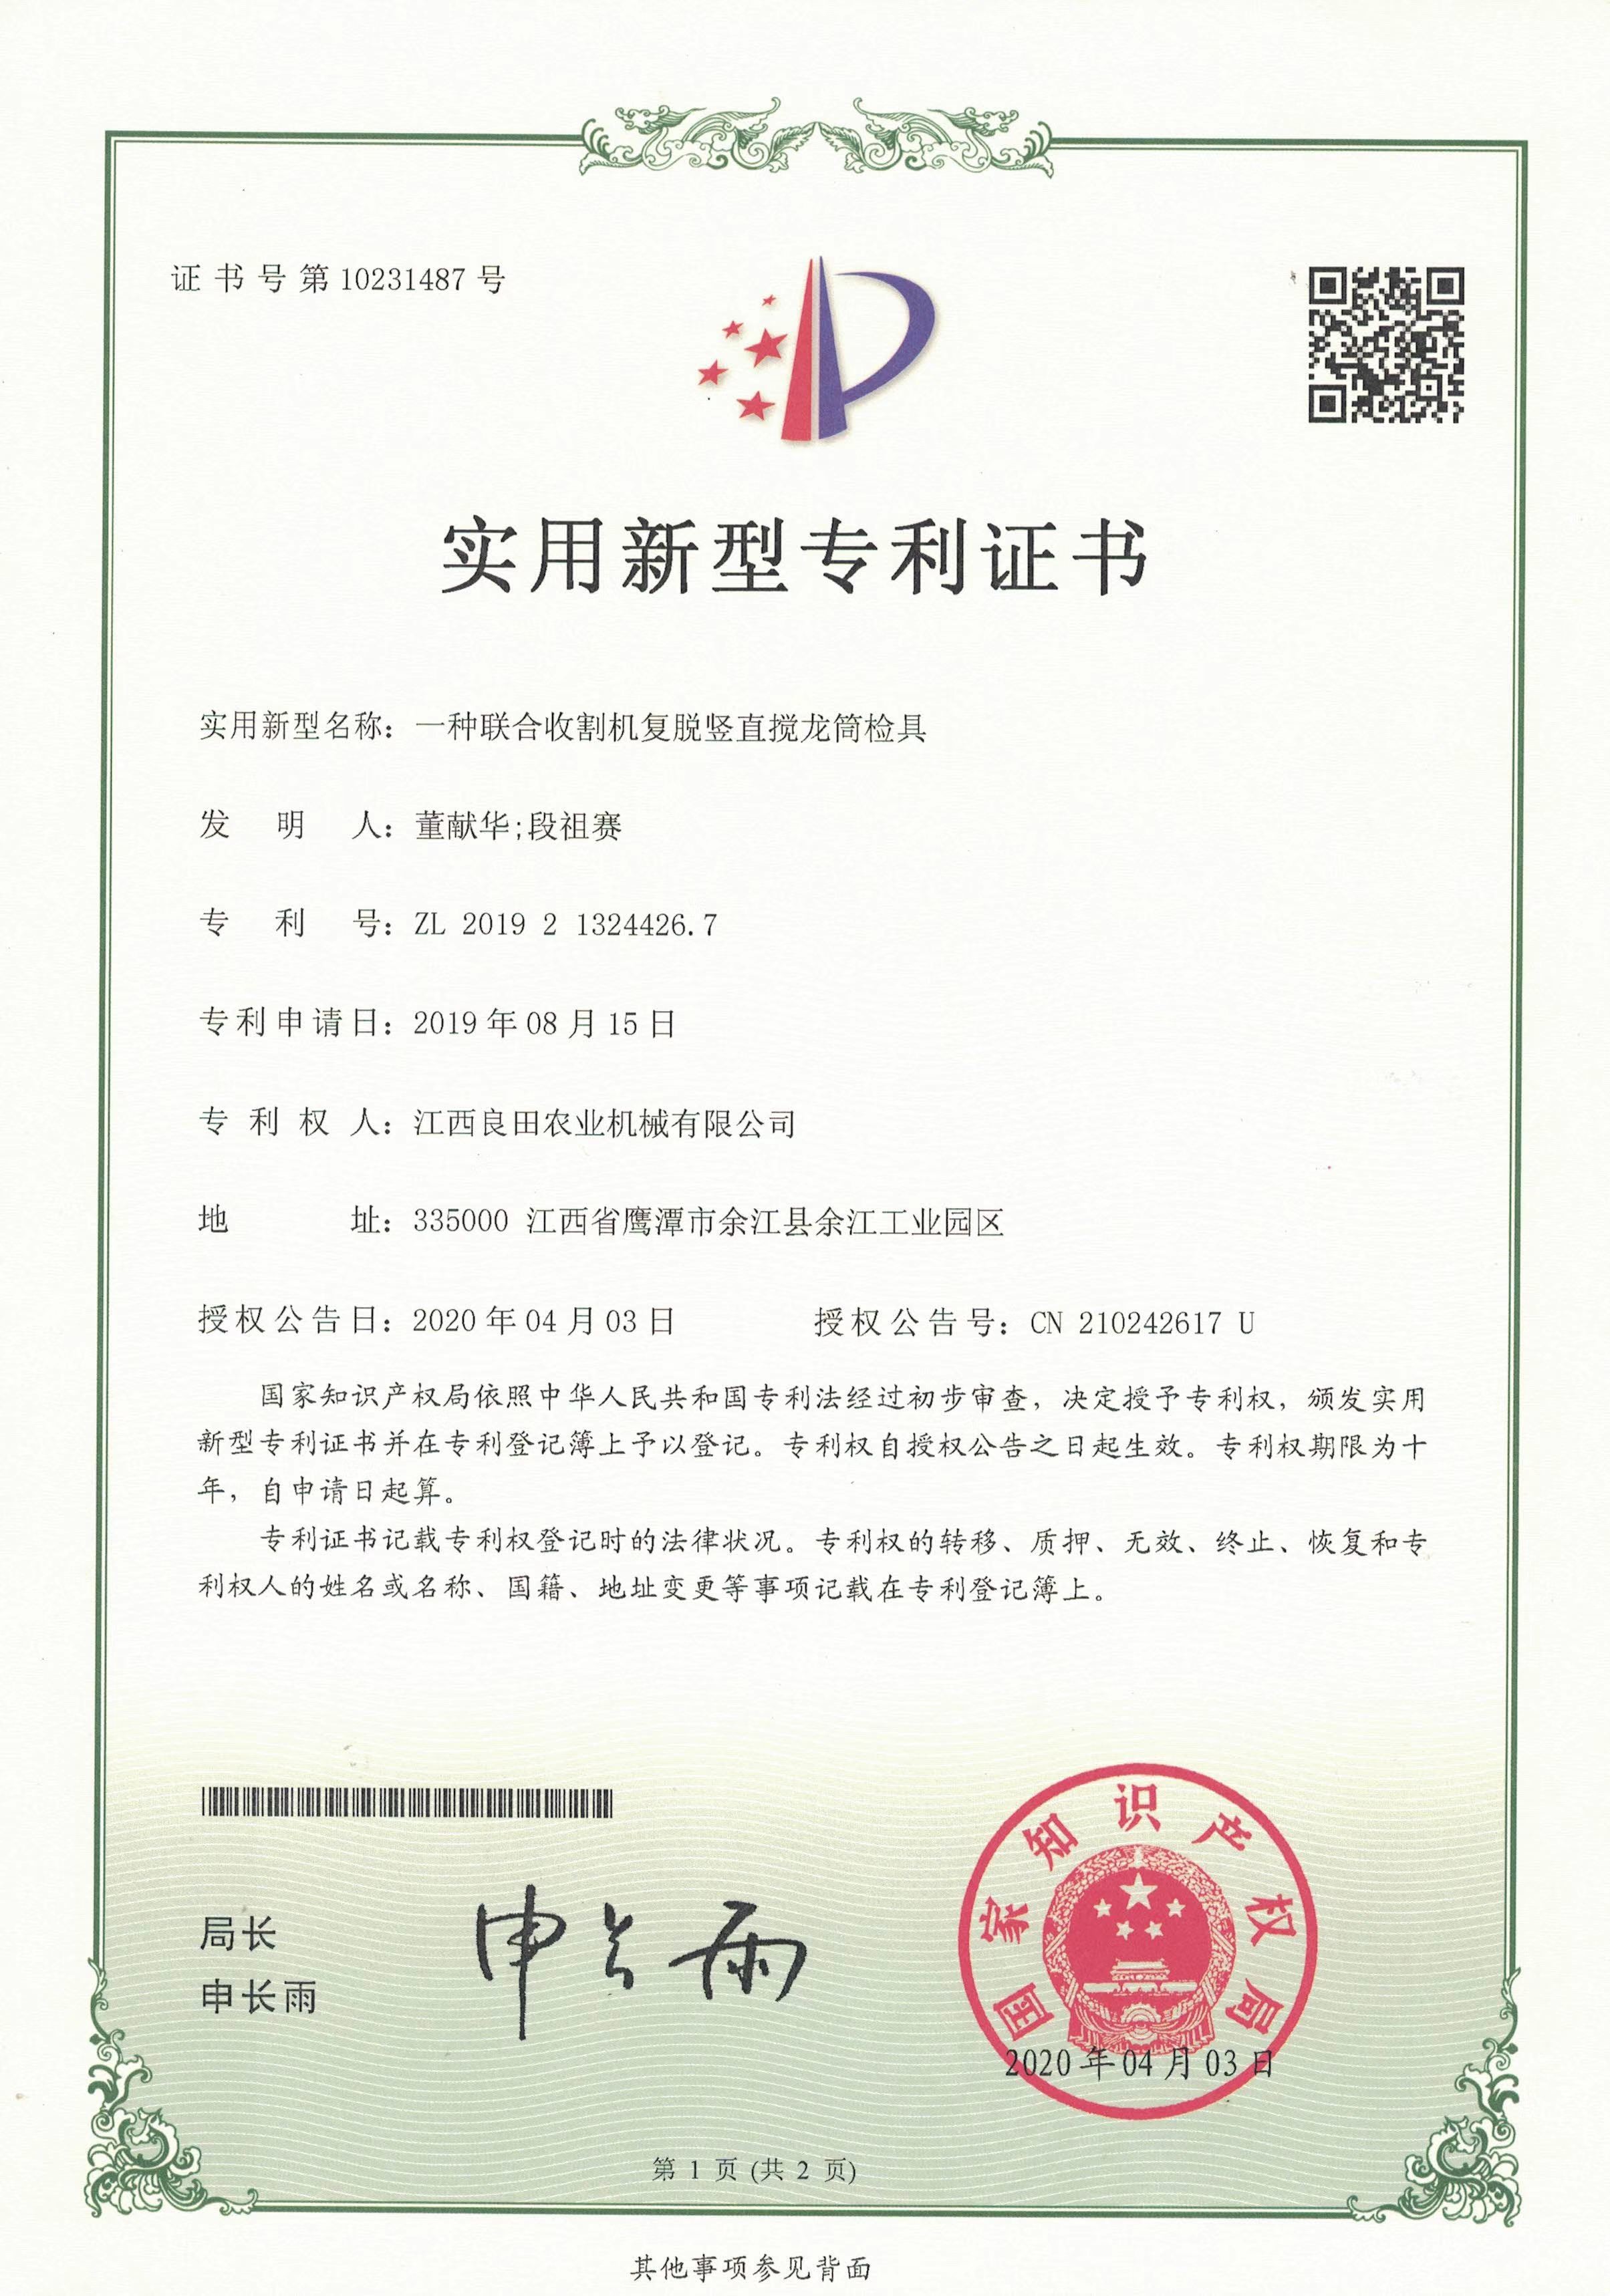 China Wuhan Wubota Machinery Co., Ltd. Certification